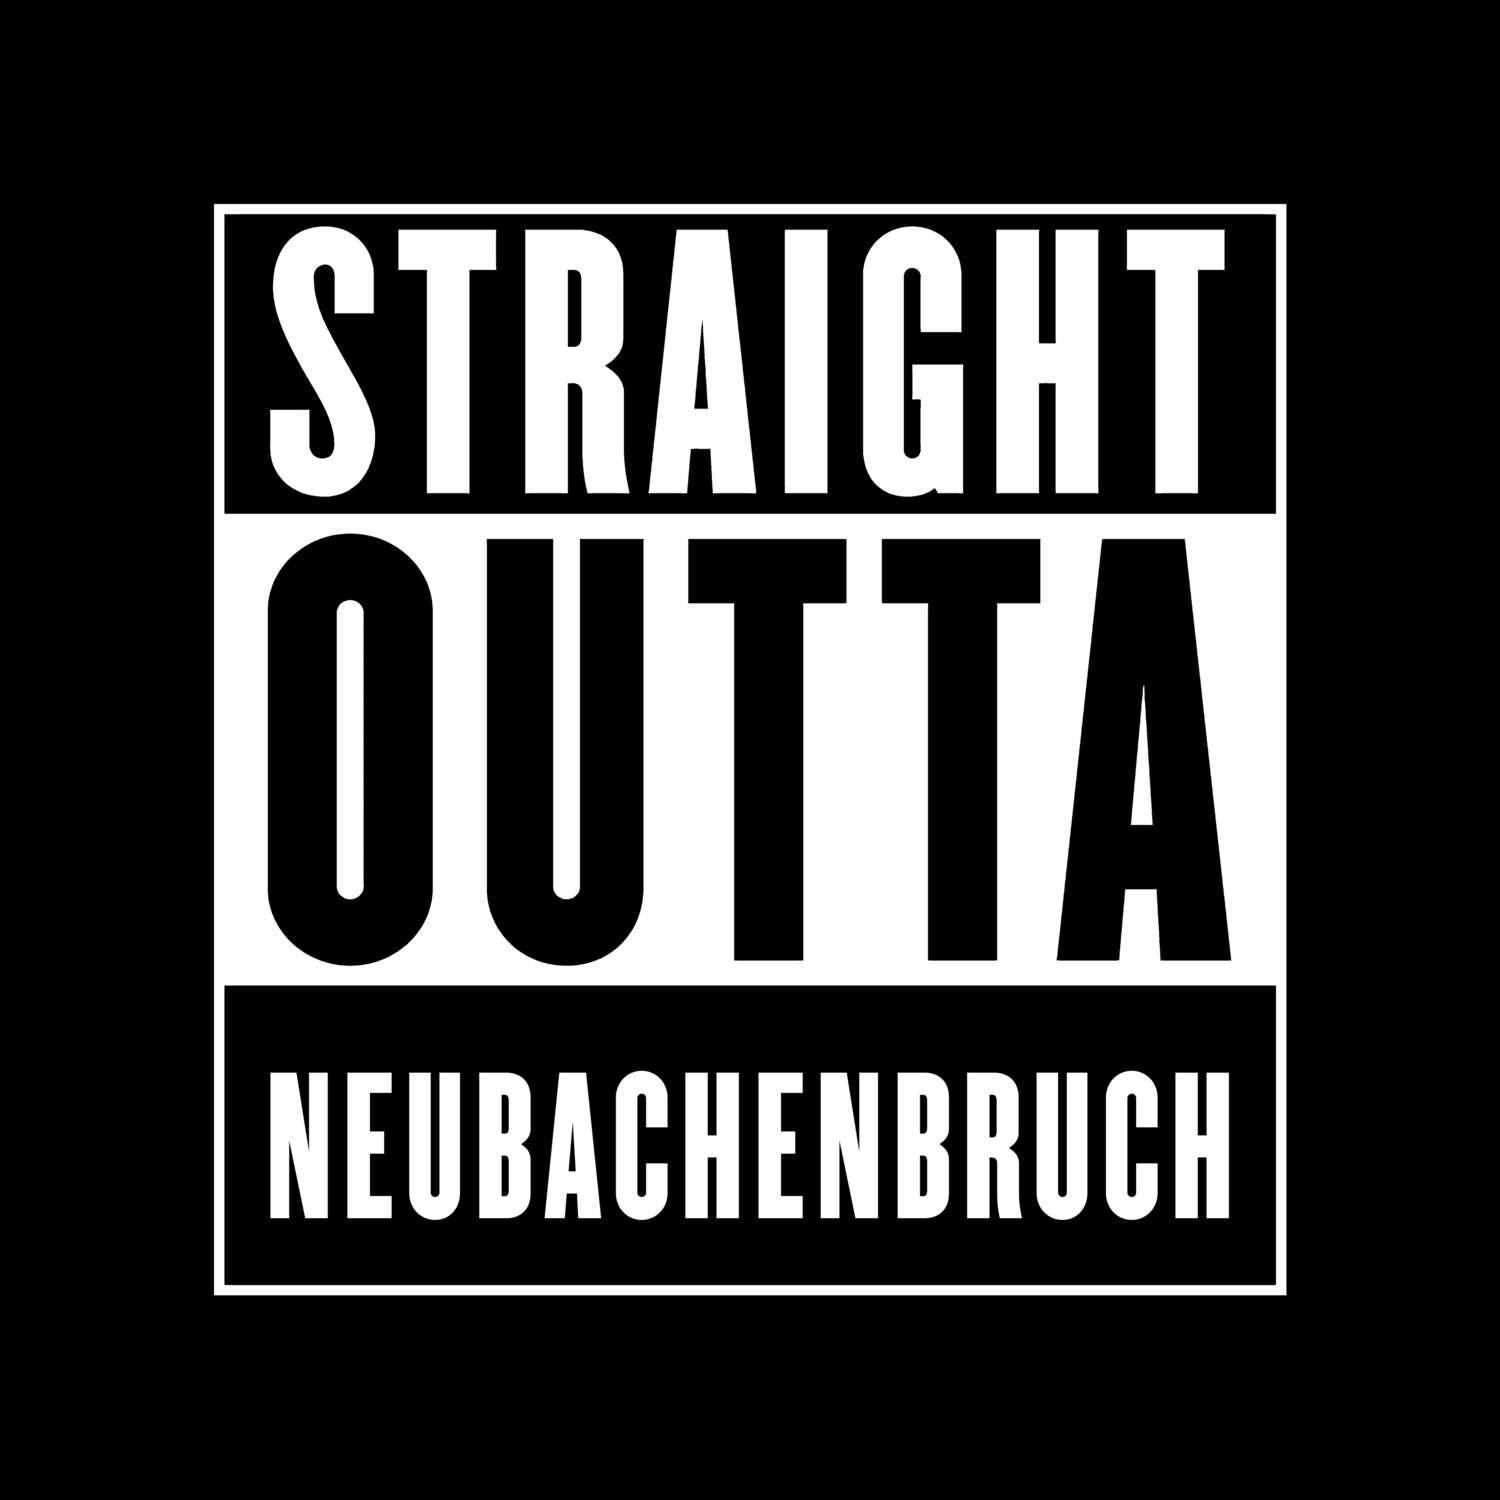 Neubachenbruch T-Shirt »Straight Outta«